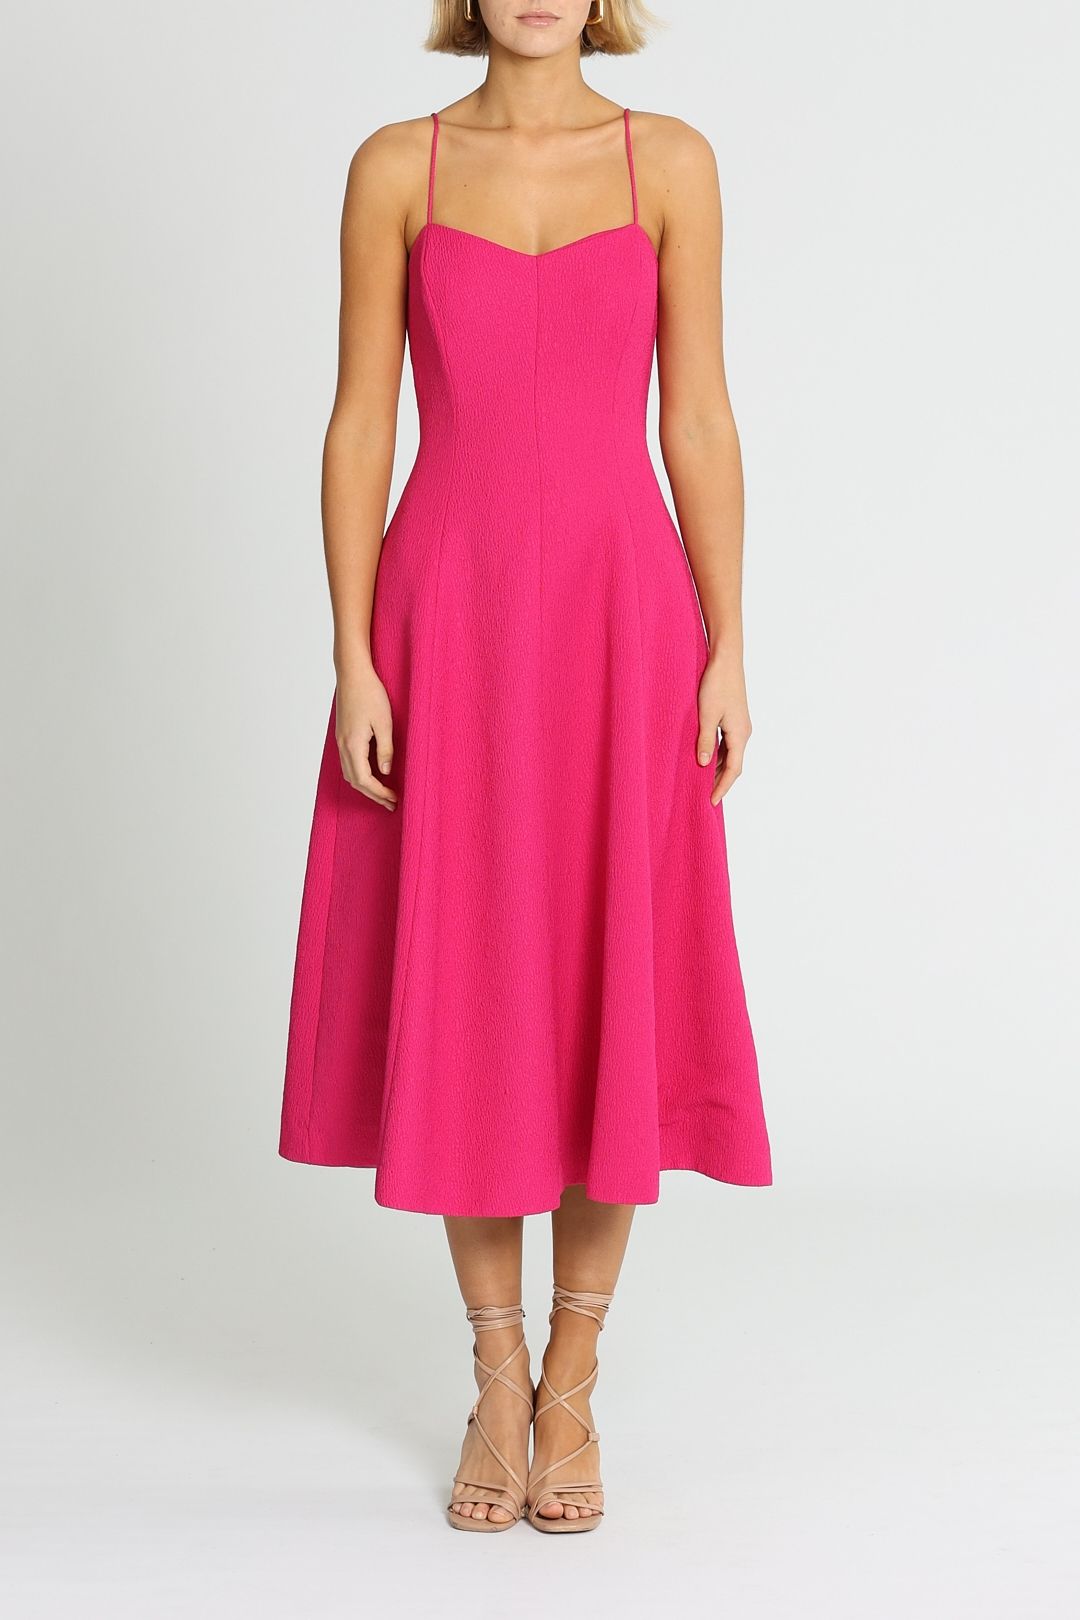 Rebecca Vallance Natalia Strap Dress Pink